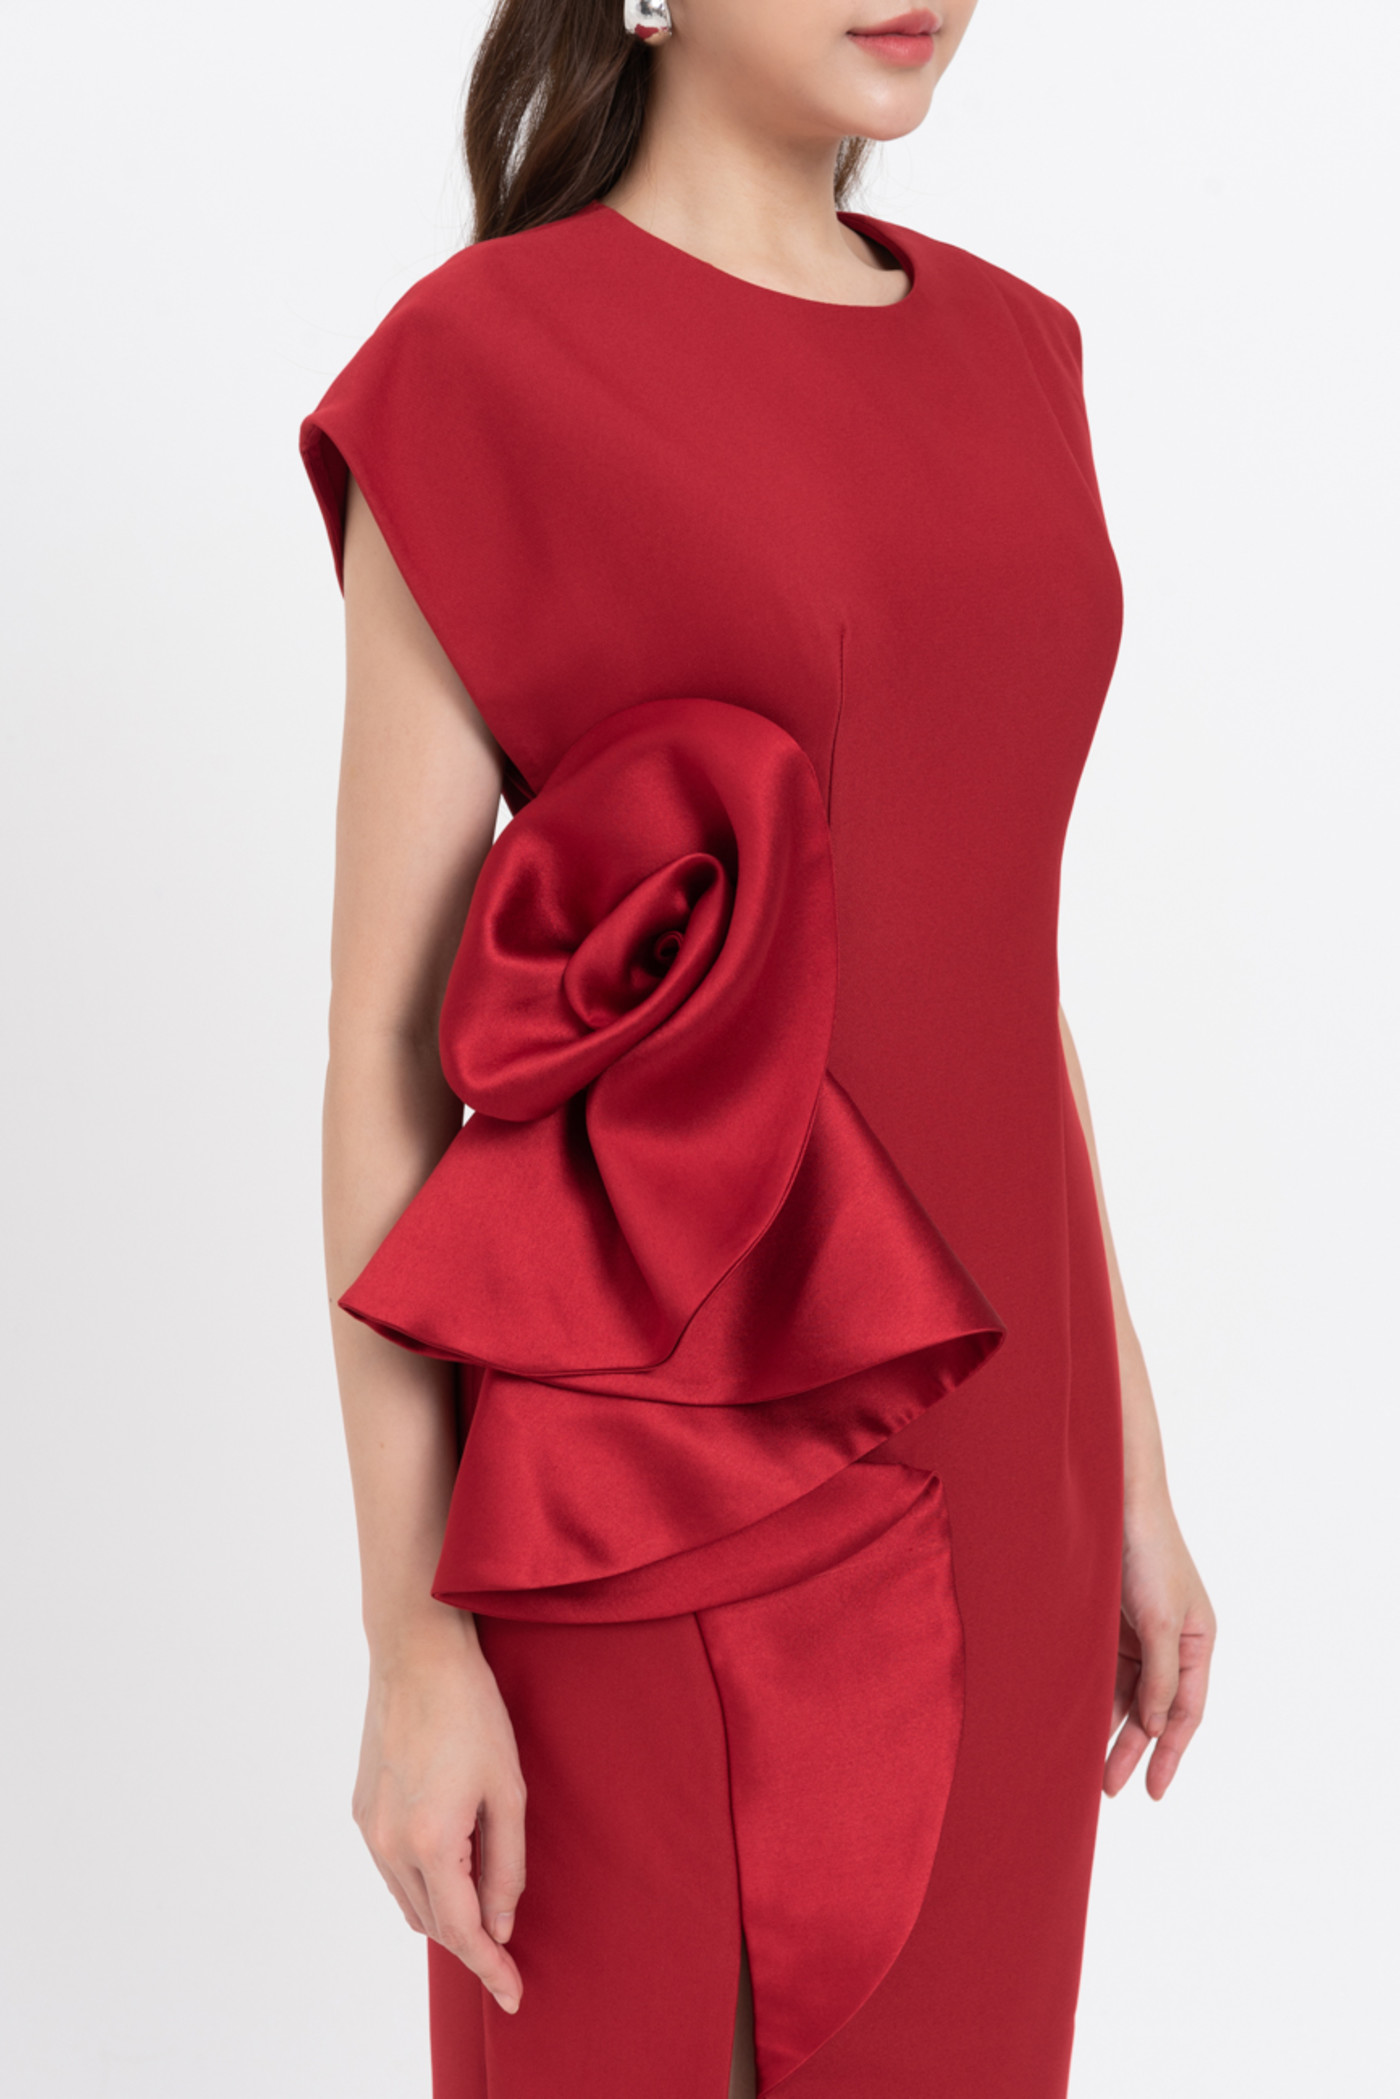 Rosy Dress - Đầm dạ hội xếp hoa 